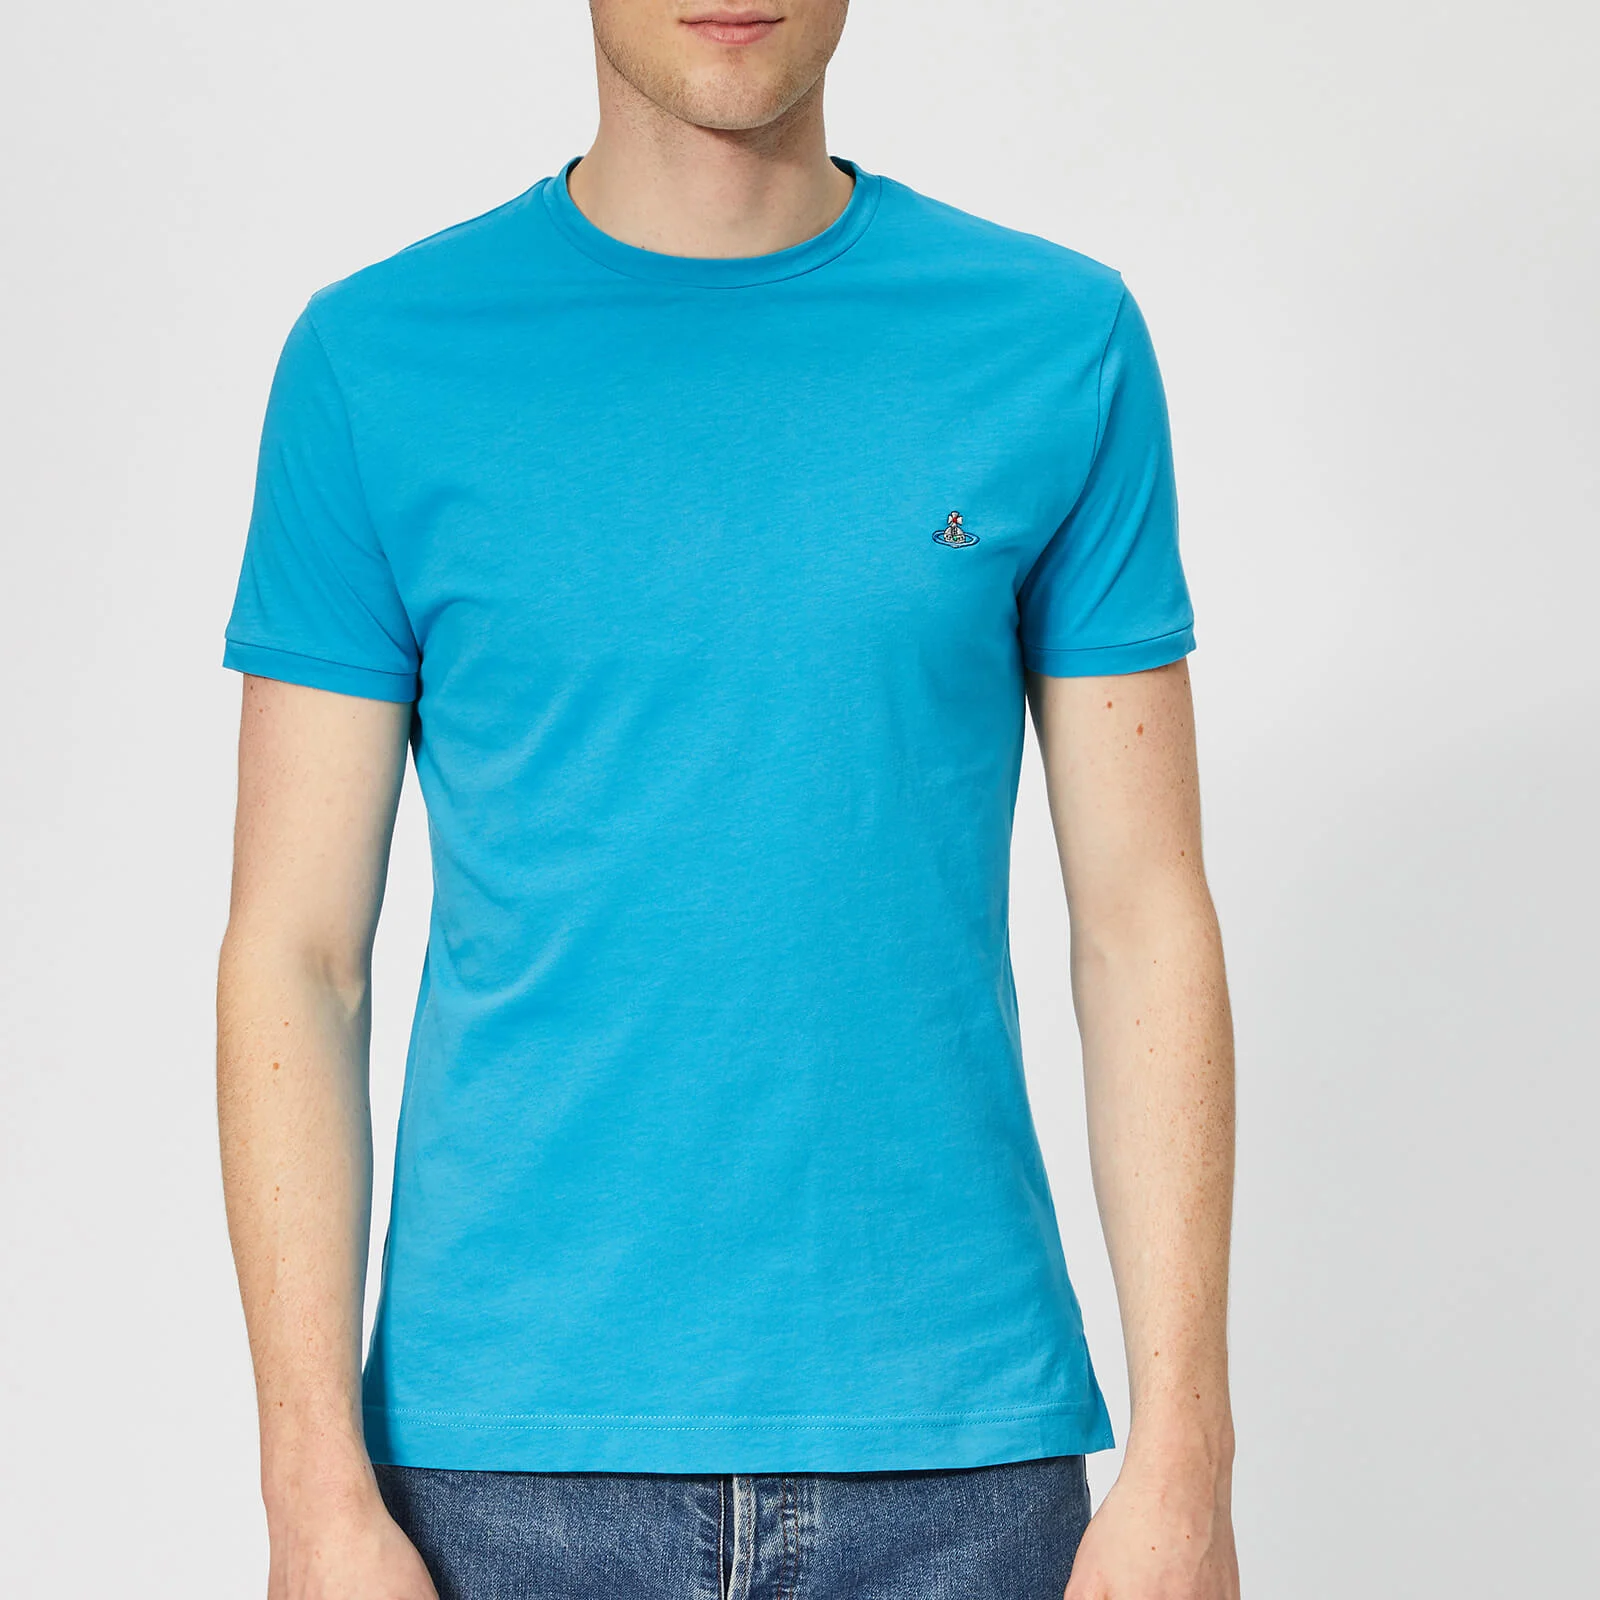 Vivienne Westwood Men's Peru T-Shirt - Turquoise Image 1